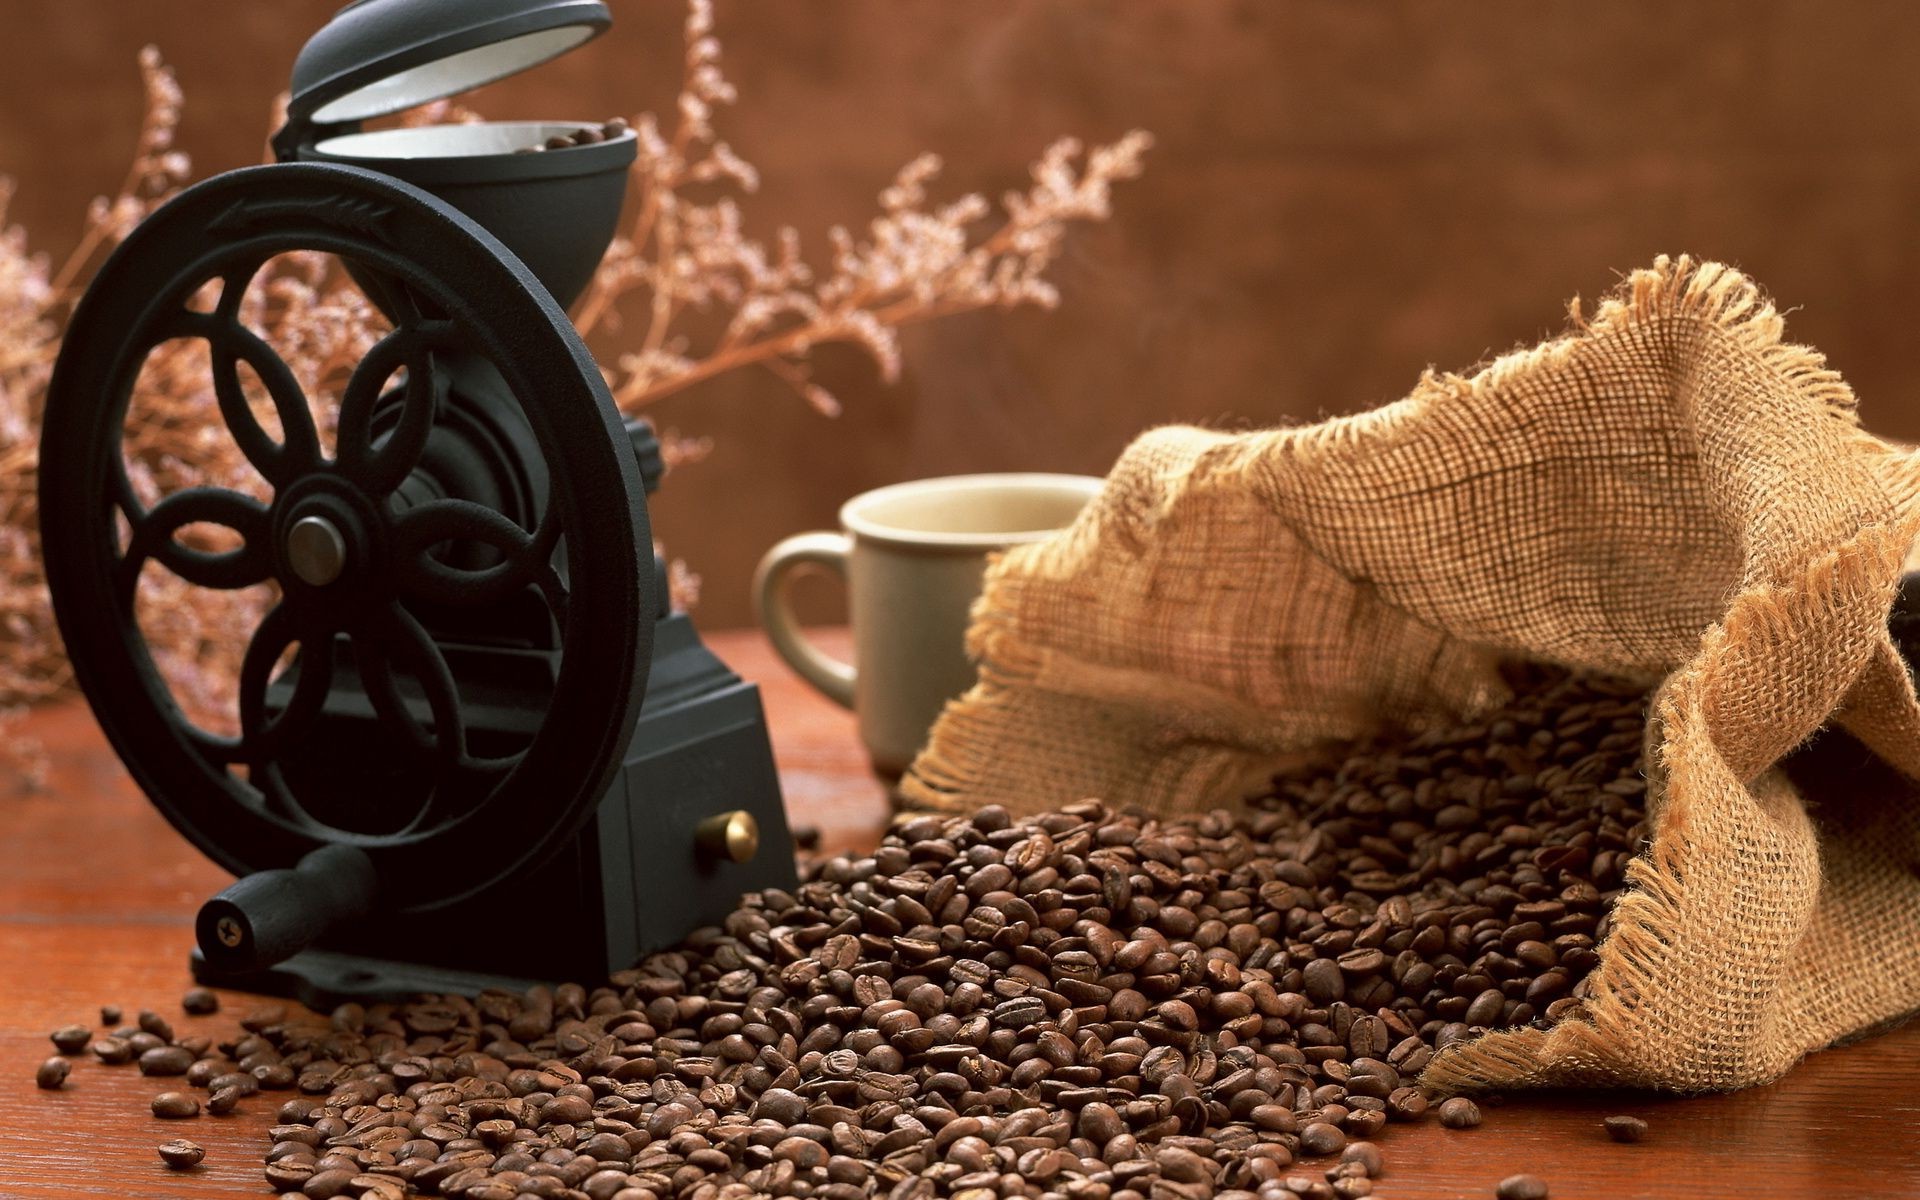 coffee drink caffeine espresso dawn food breakfast cereal burlap cup dark wood sack table seed bean bag perfume mug